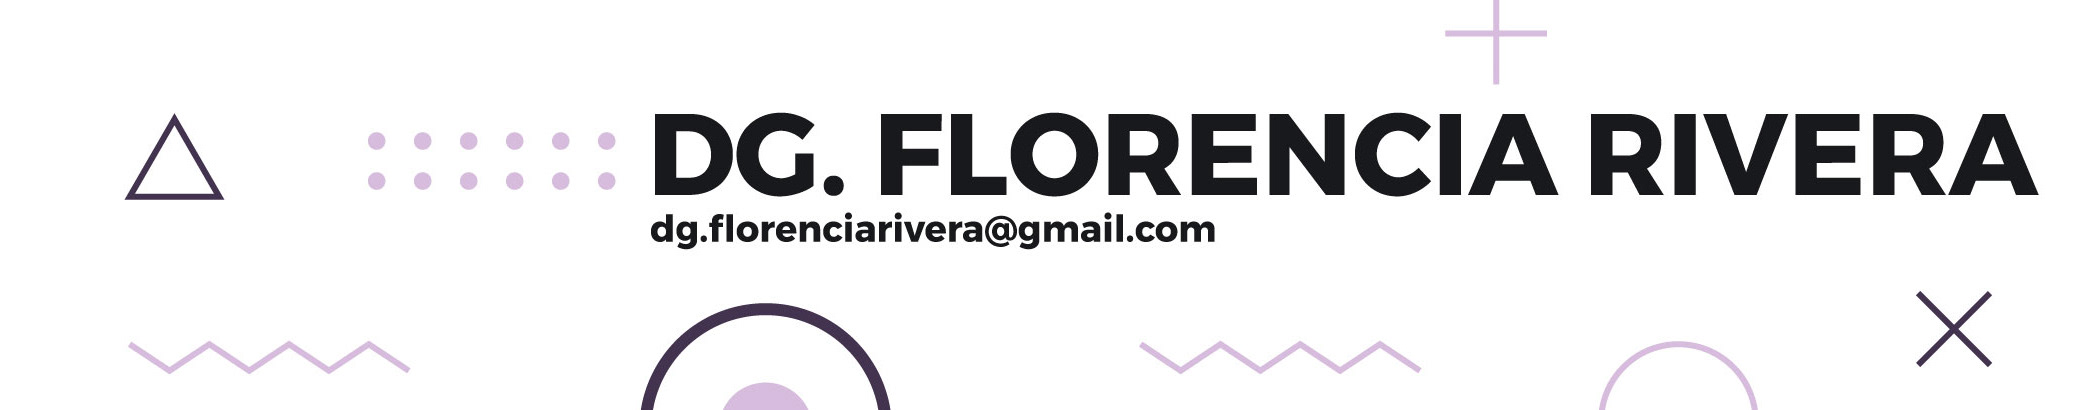 Florencia Rivera profil başlığı